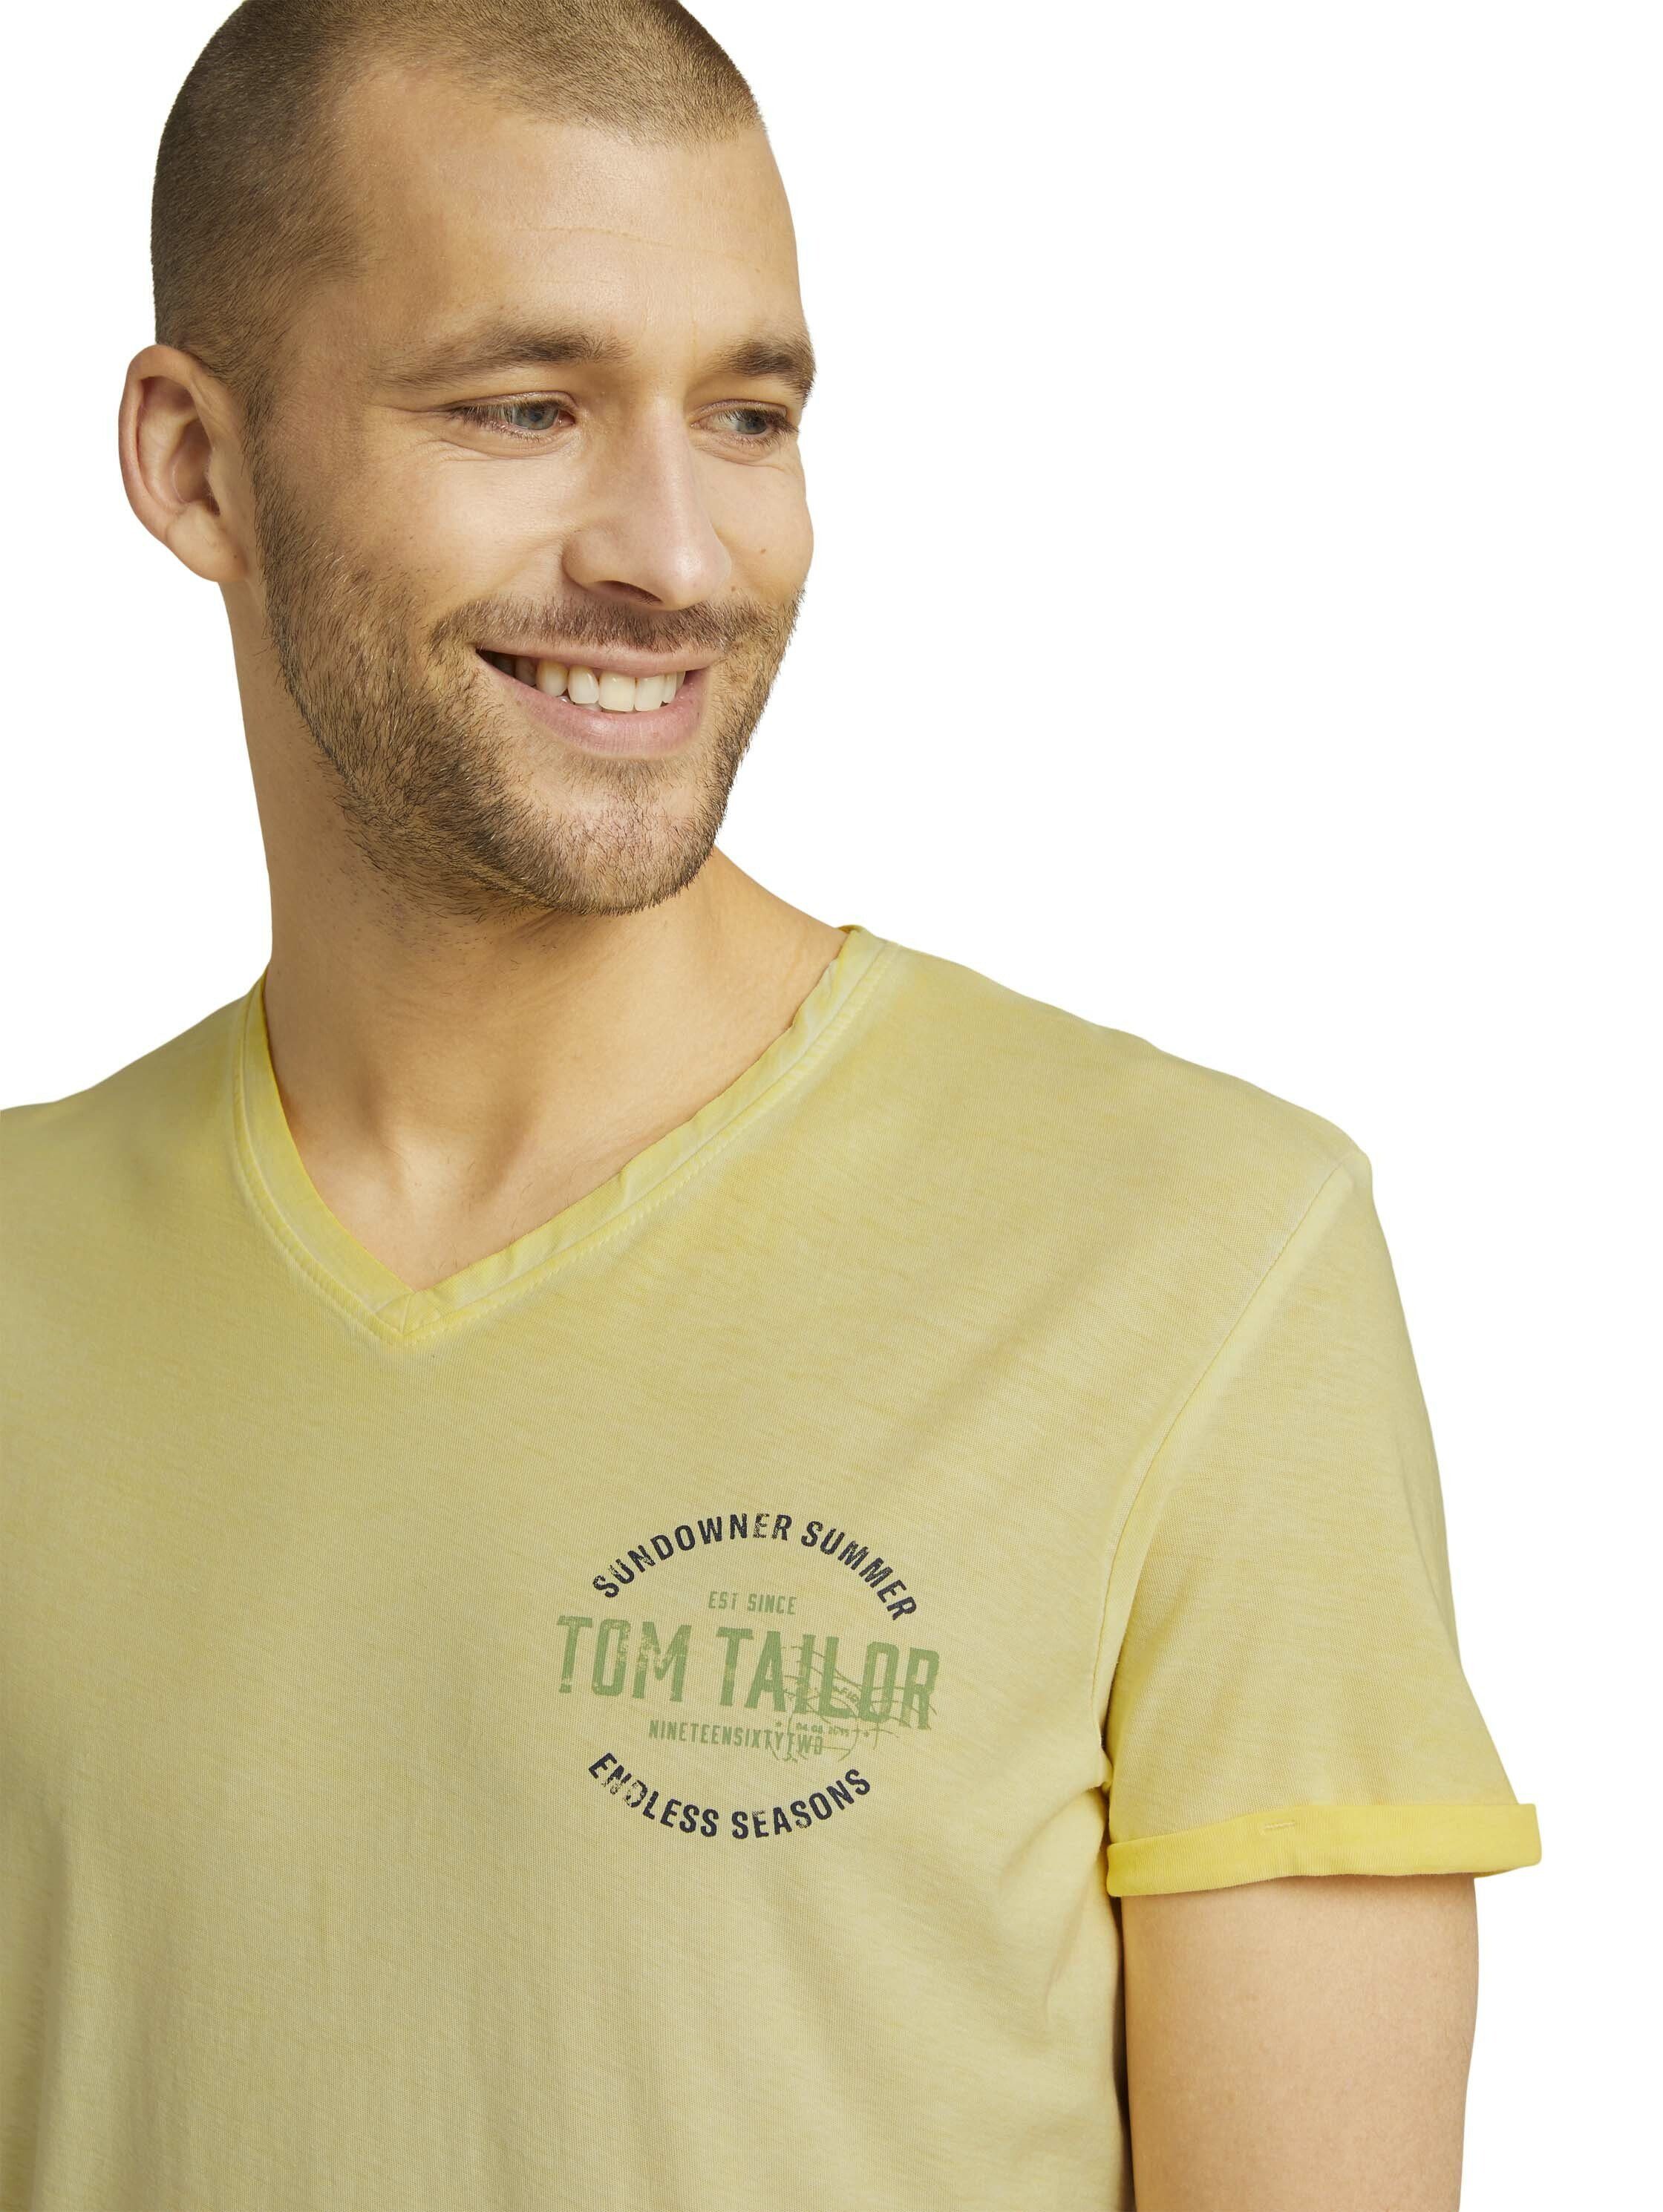 TOM TAILOR T-Shirt Shirt Shirt mit gelb Logo-Print